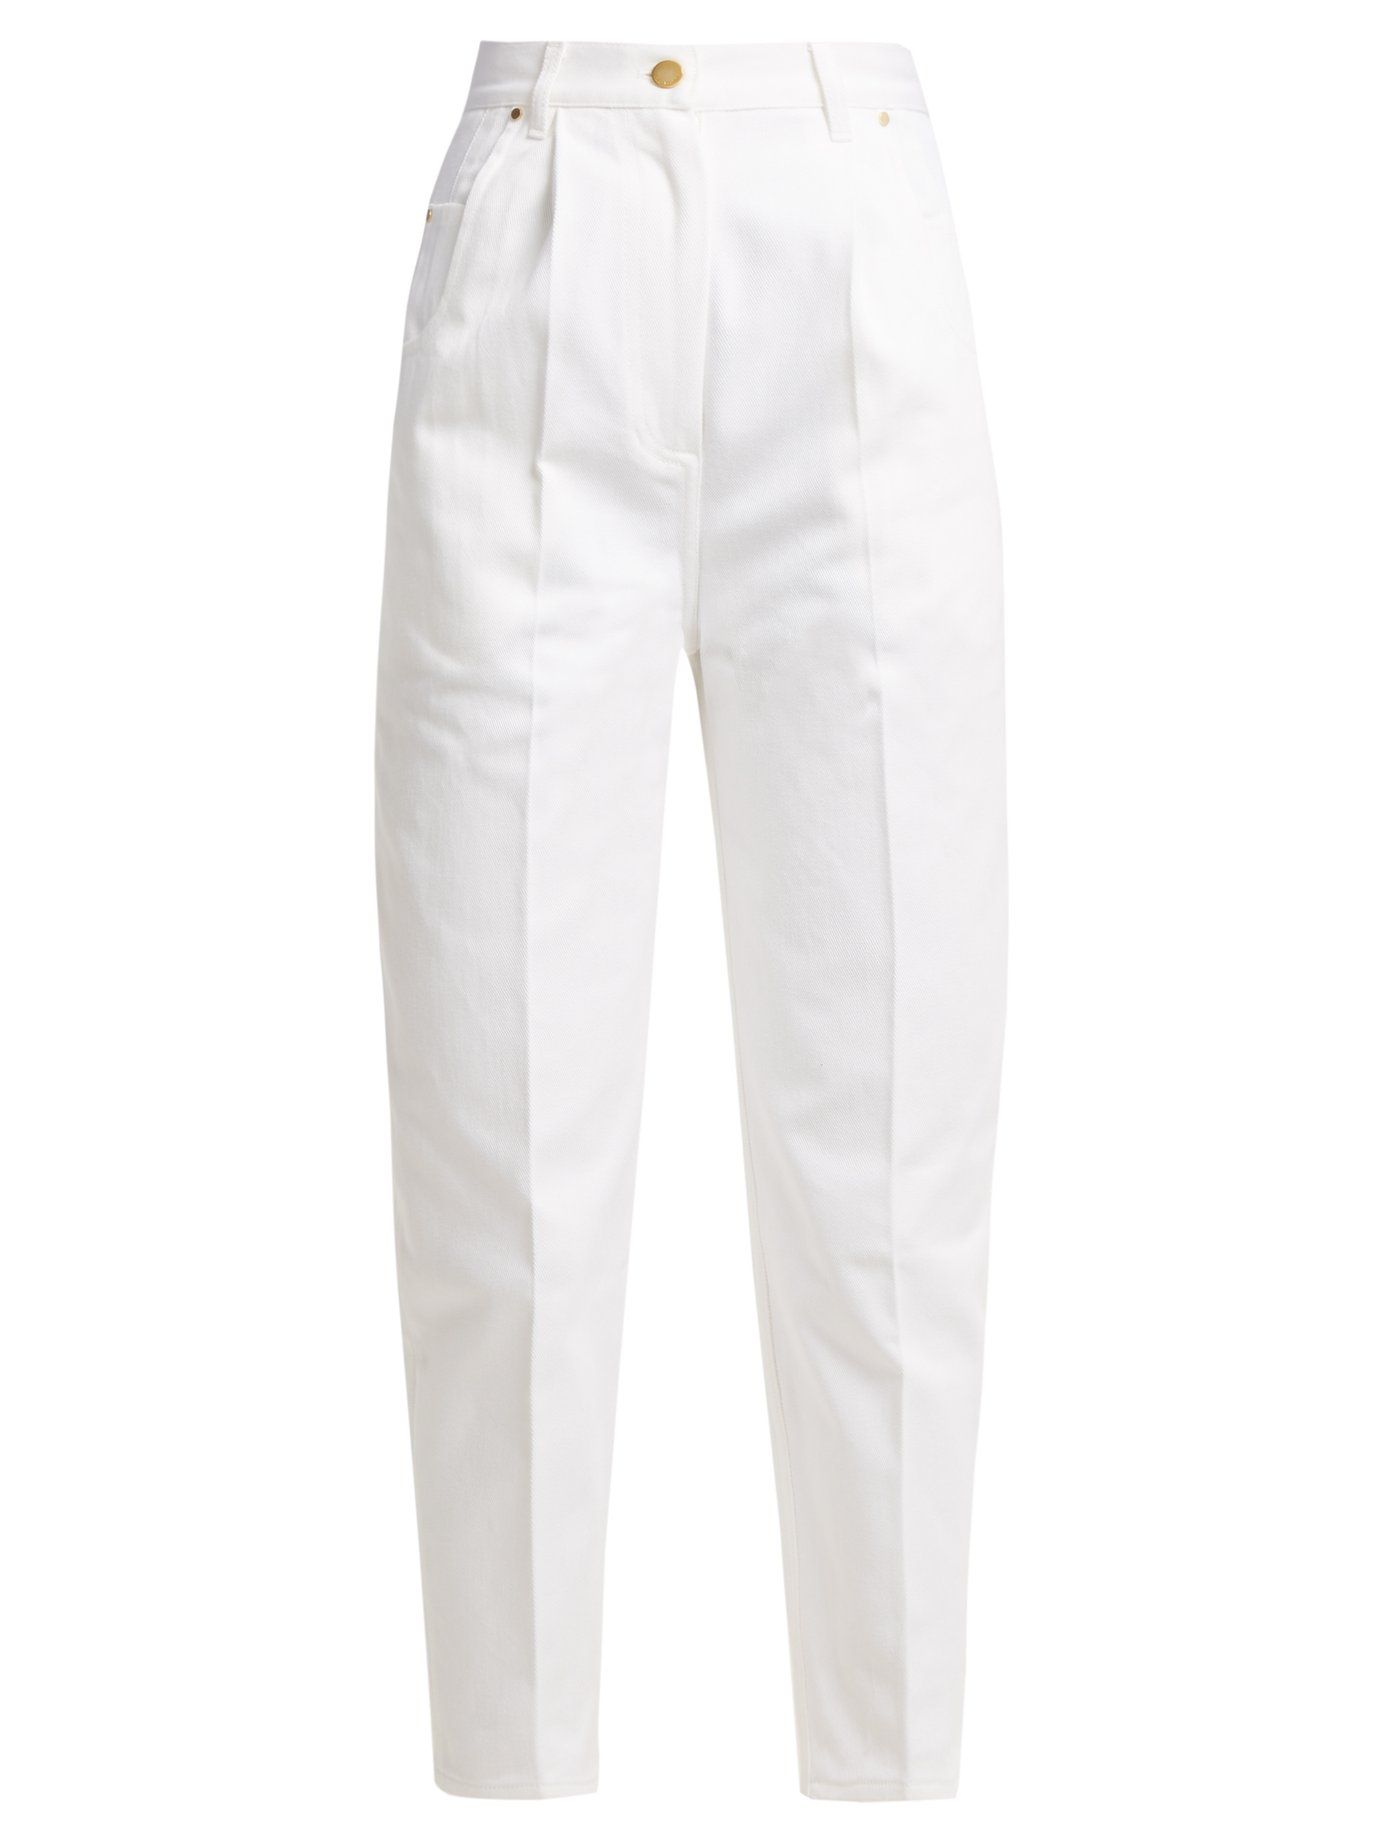 The Best White Jeans for Women 2022: Stylish White Denim for Spring